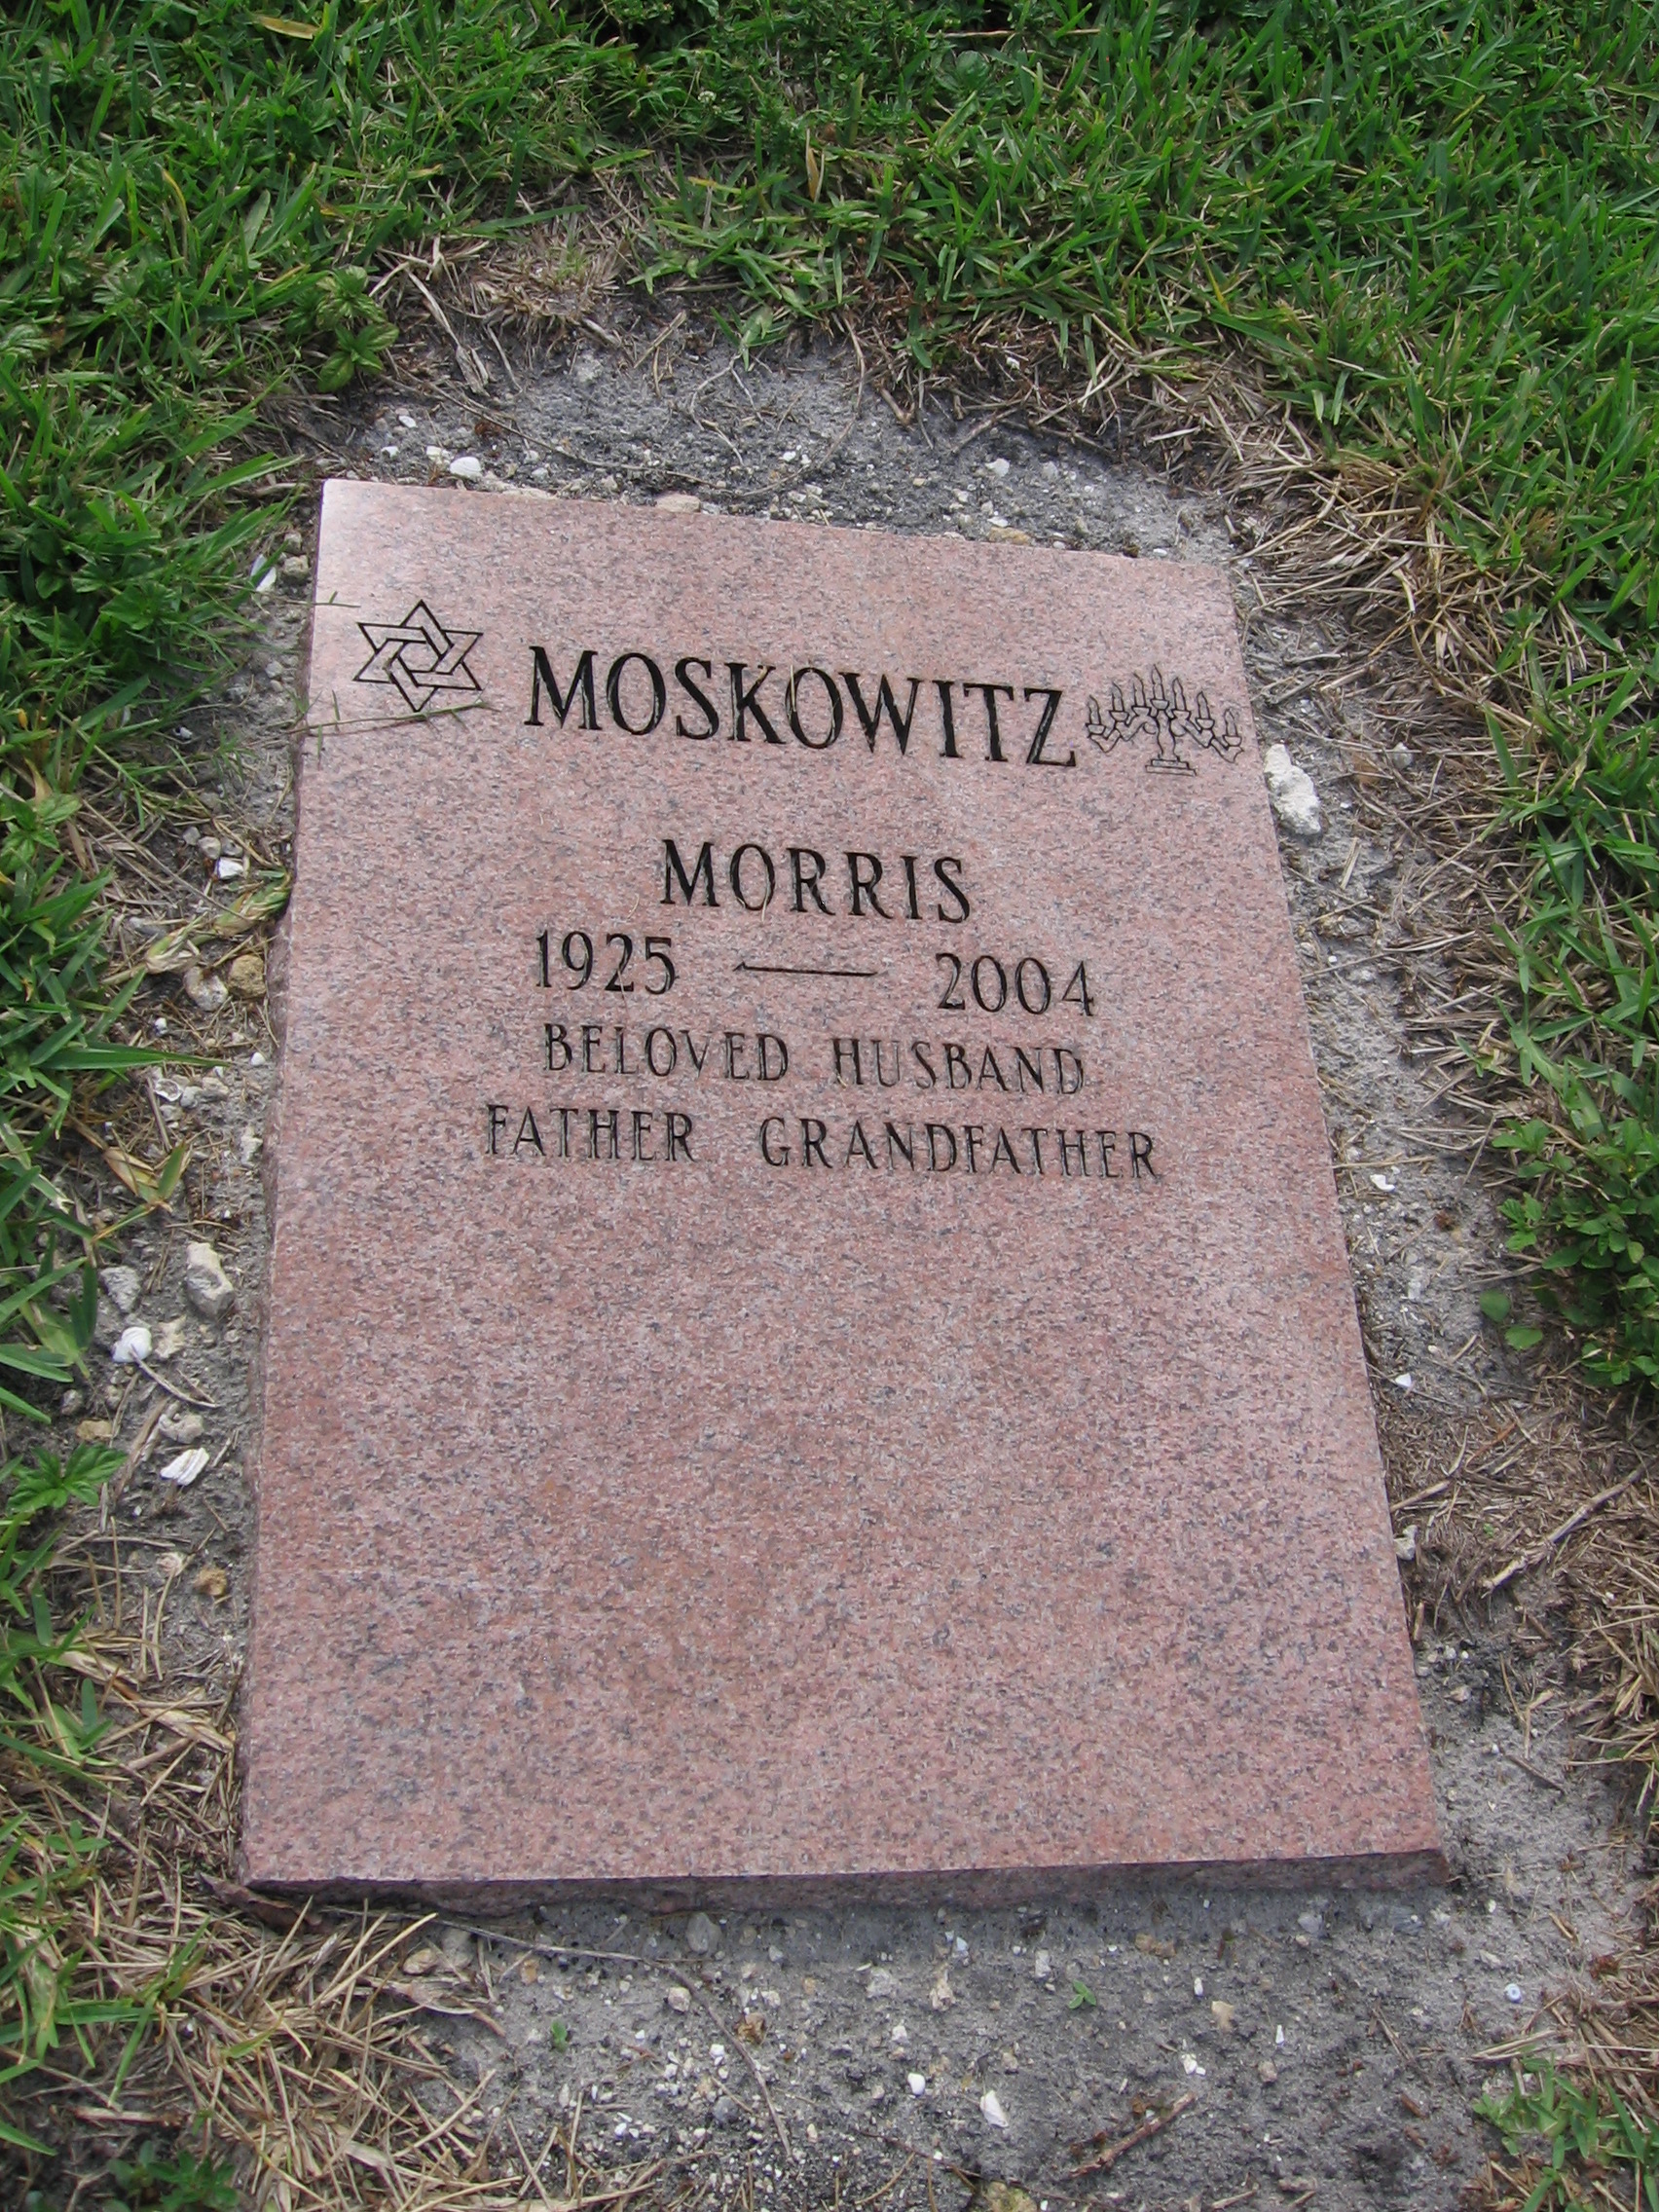 Morris Moskowitz